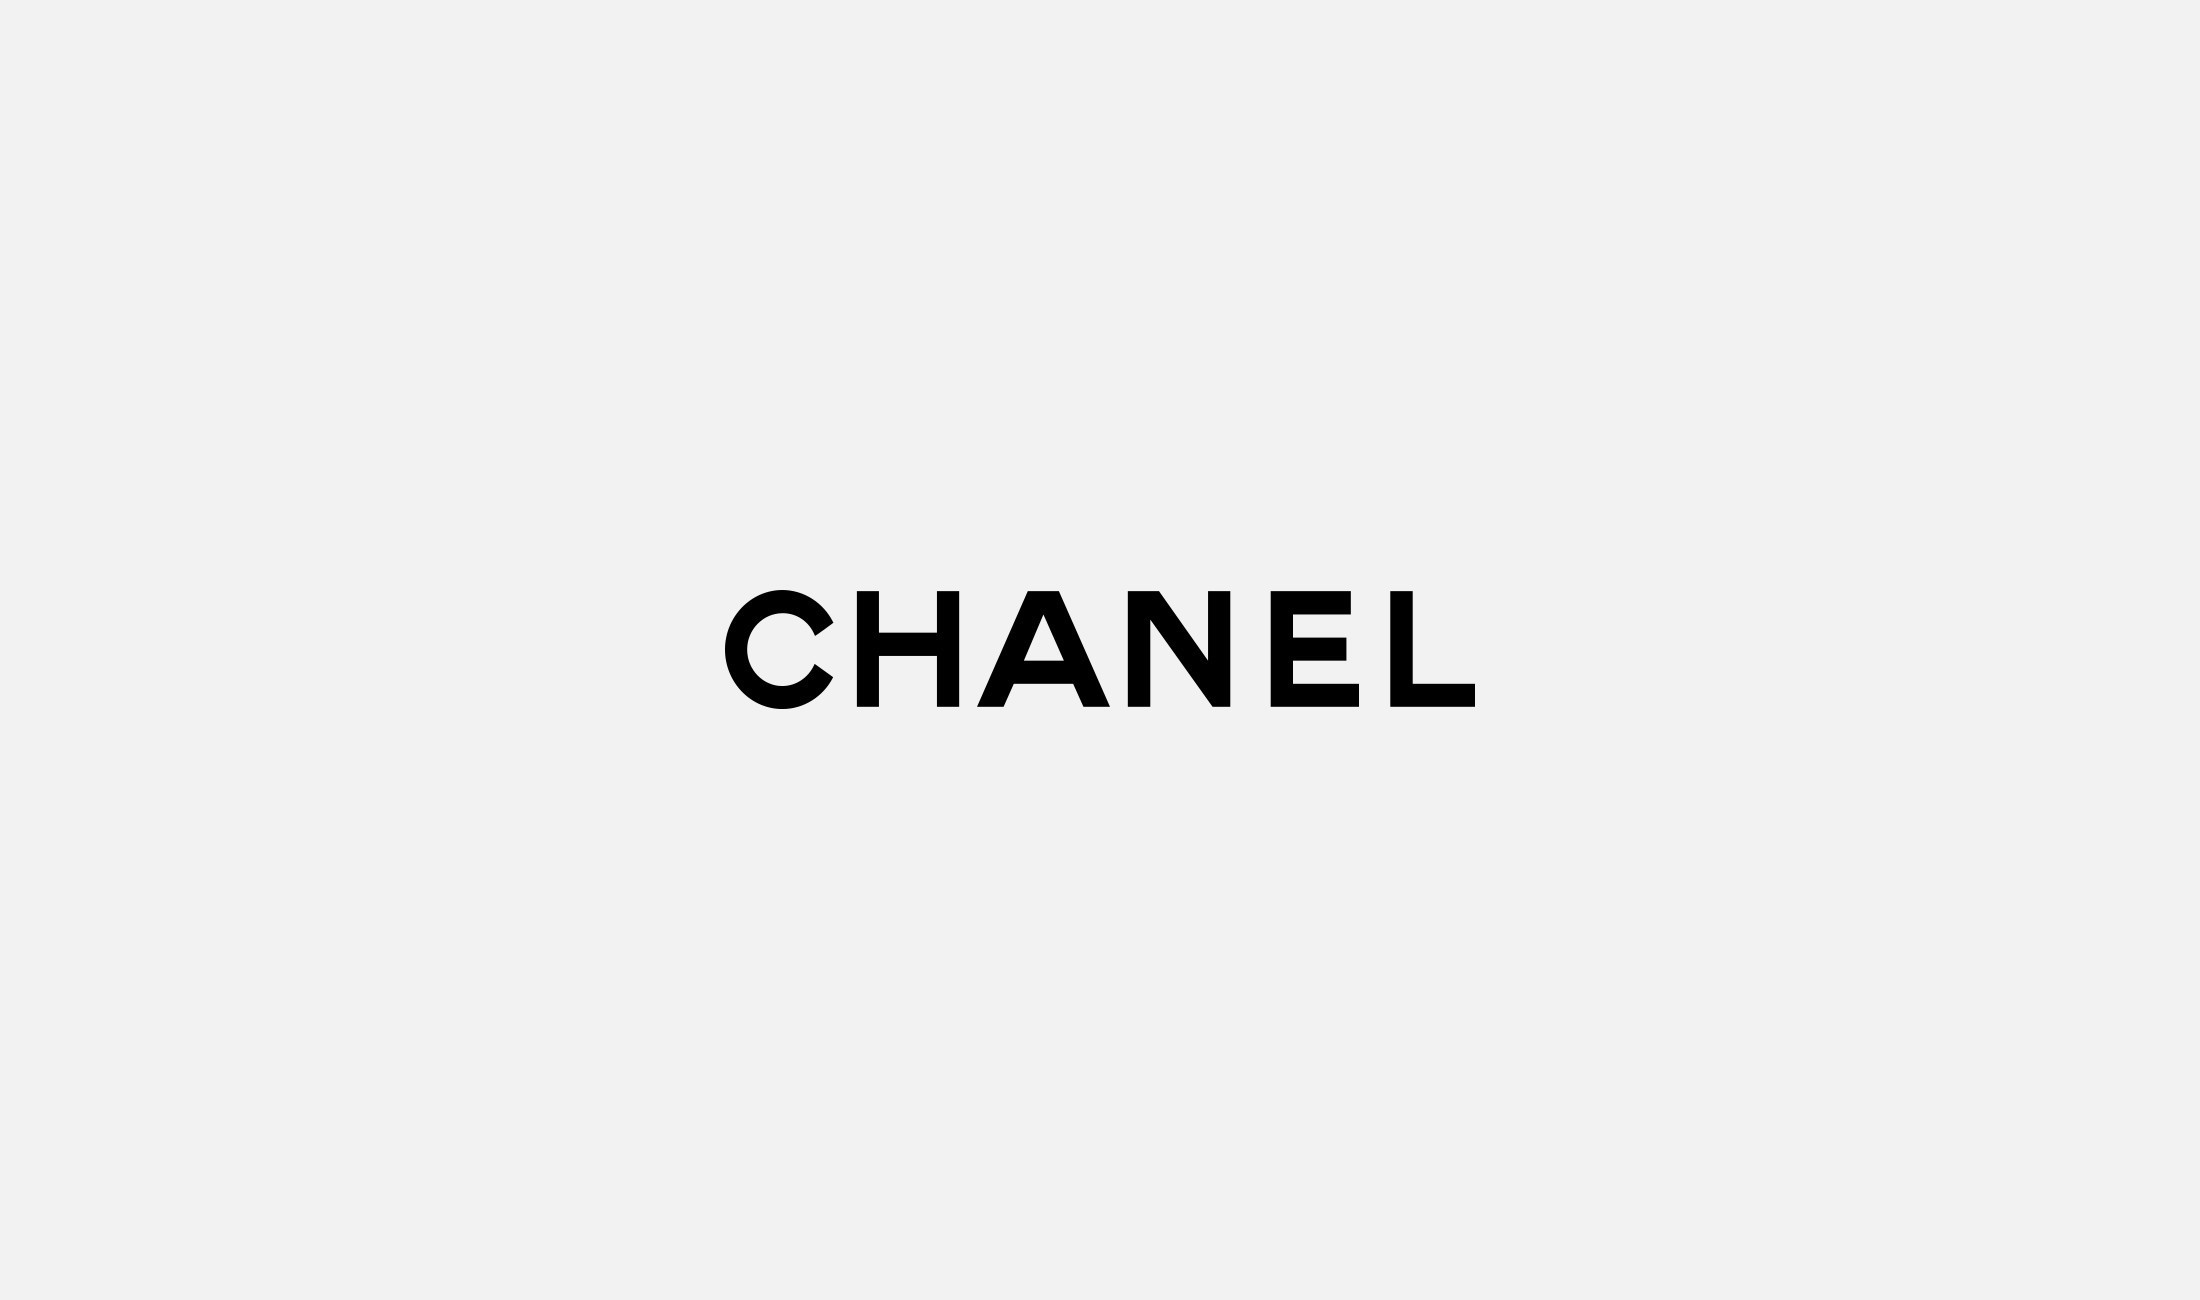 2200x1300  Chanel Wallpaper for iPhone WallpaperSafari Source ÃÂ· 3000x2000  Comment Poser Les Water Decals Int graux Coco Chanel Nail Art Chanel logo  nail art